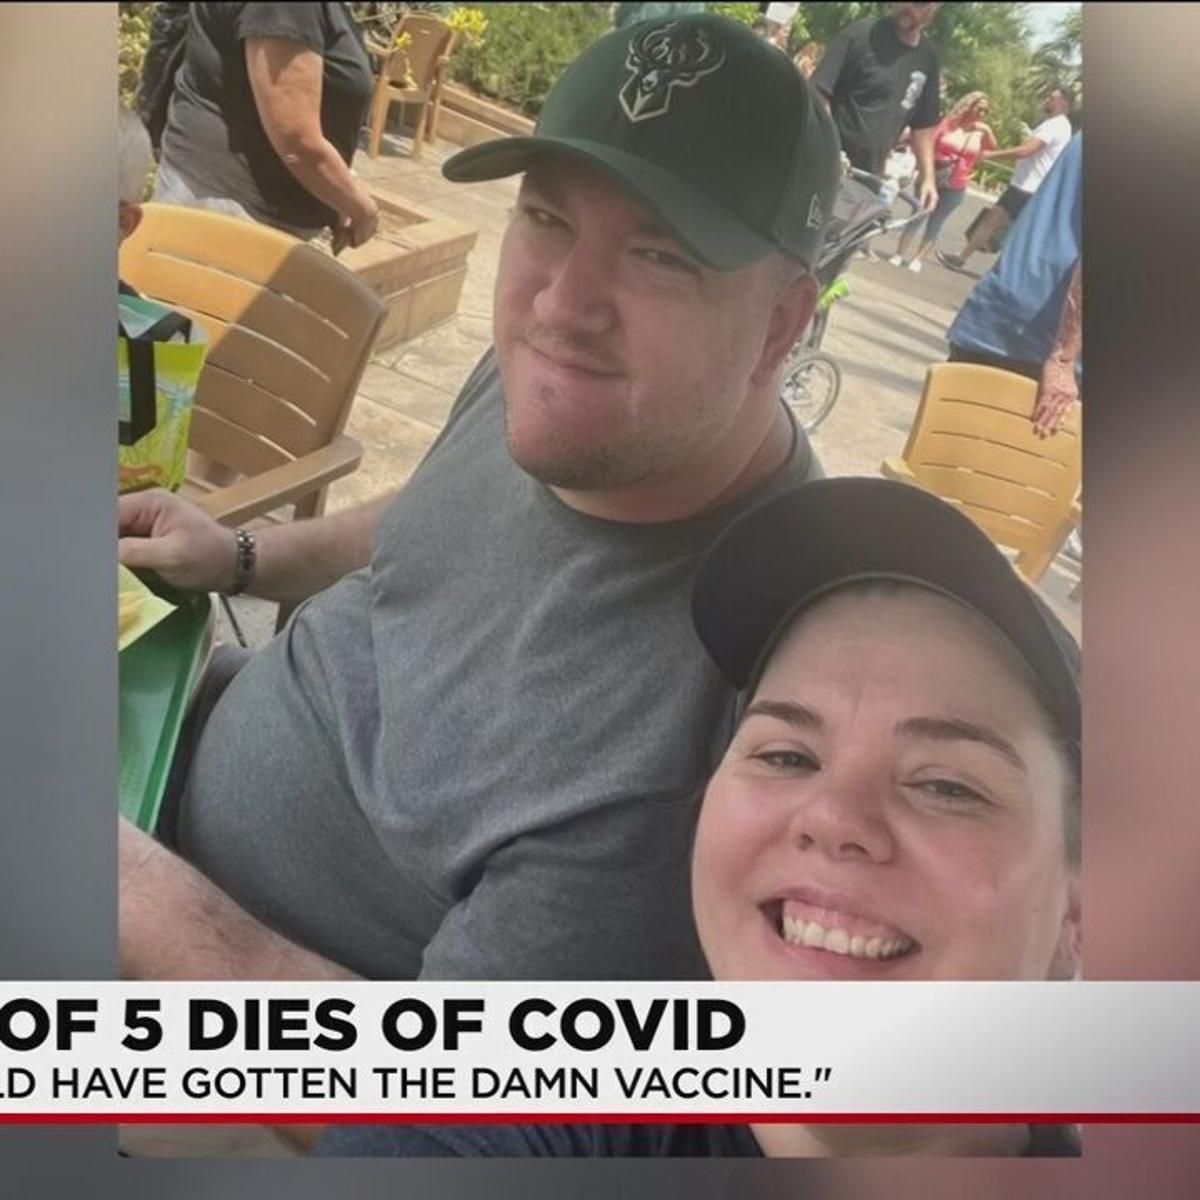 Las Vegas dad of 5 dies of COVID-19 final text